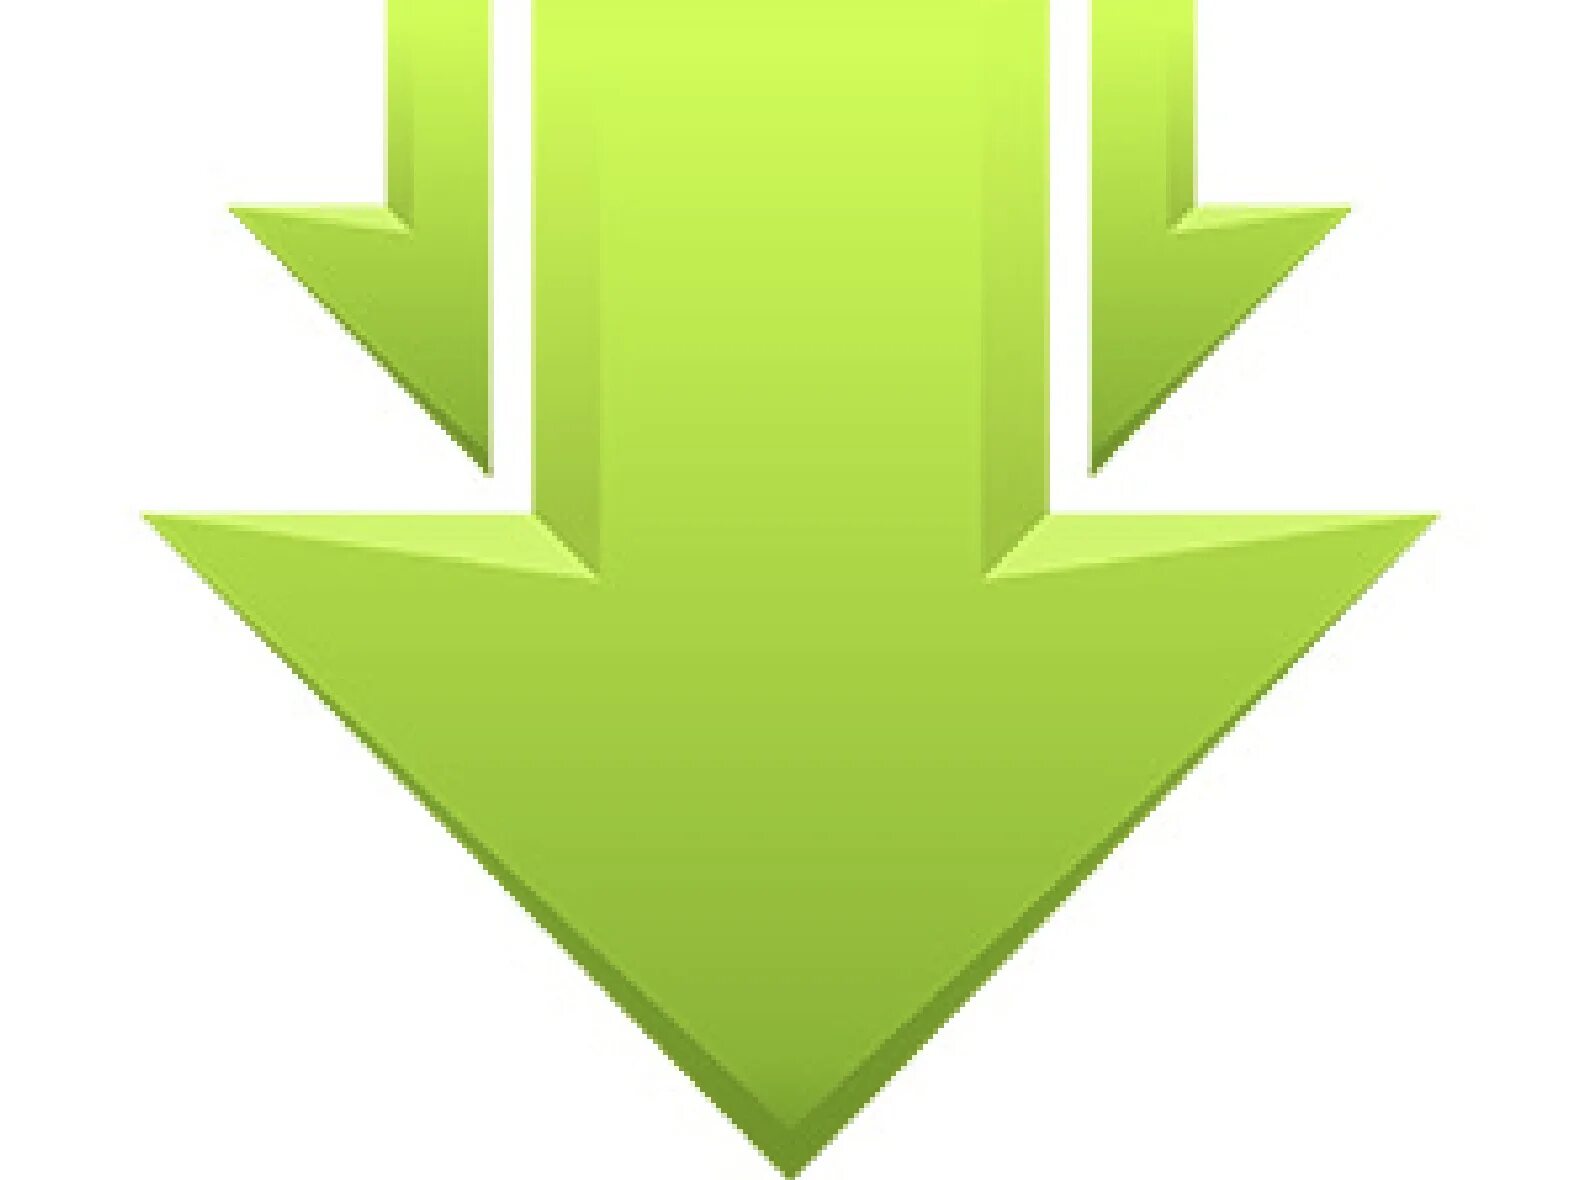 Https elfile net mp4. Savefrom. Savefrom.net картинки. Зеленая стрелочка. Программа зеленые стрелки для скачивания.